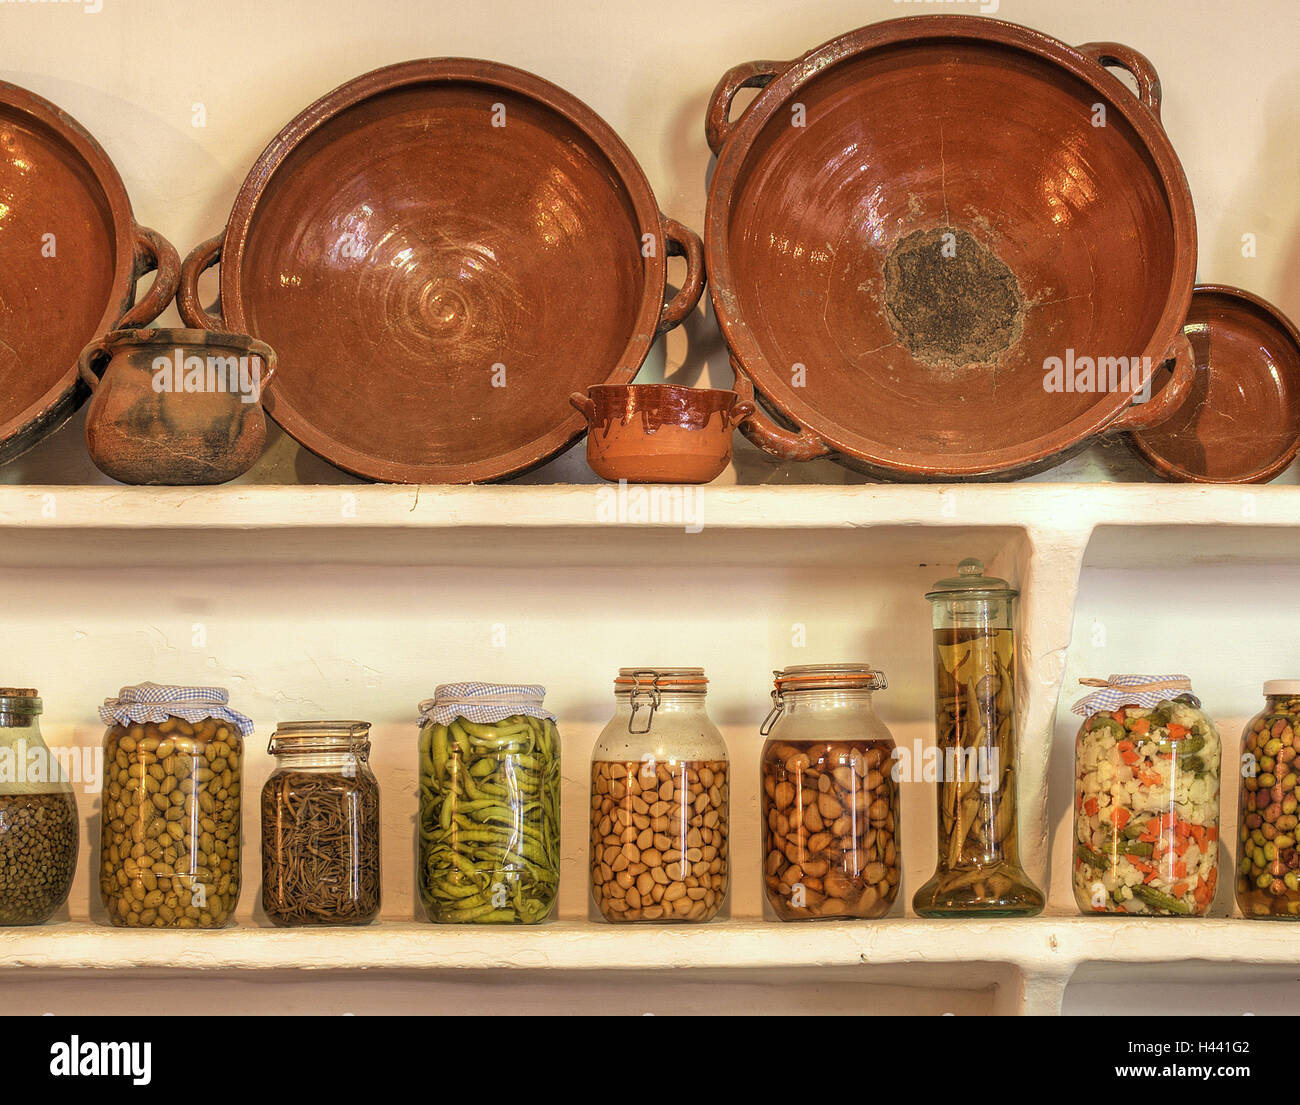 Spain, the Balearic Islands, island Majorca, La Granja, shelf, bottling jars, ceramics peels, Stock Photo